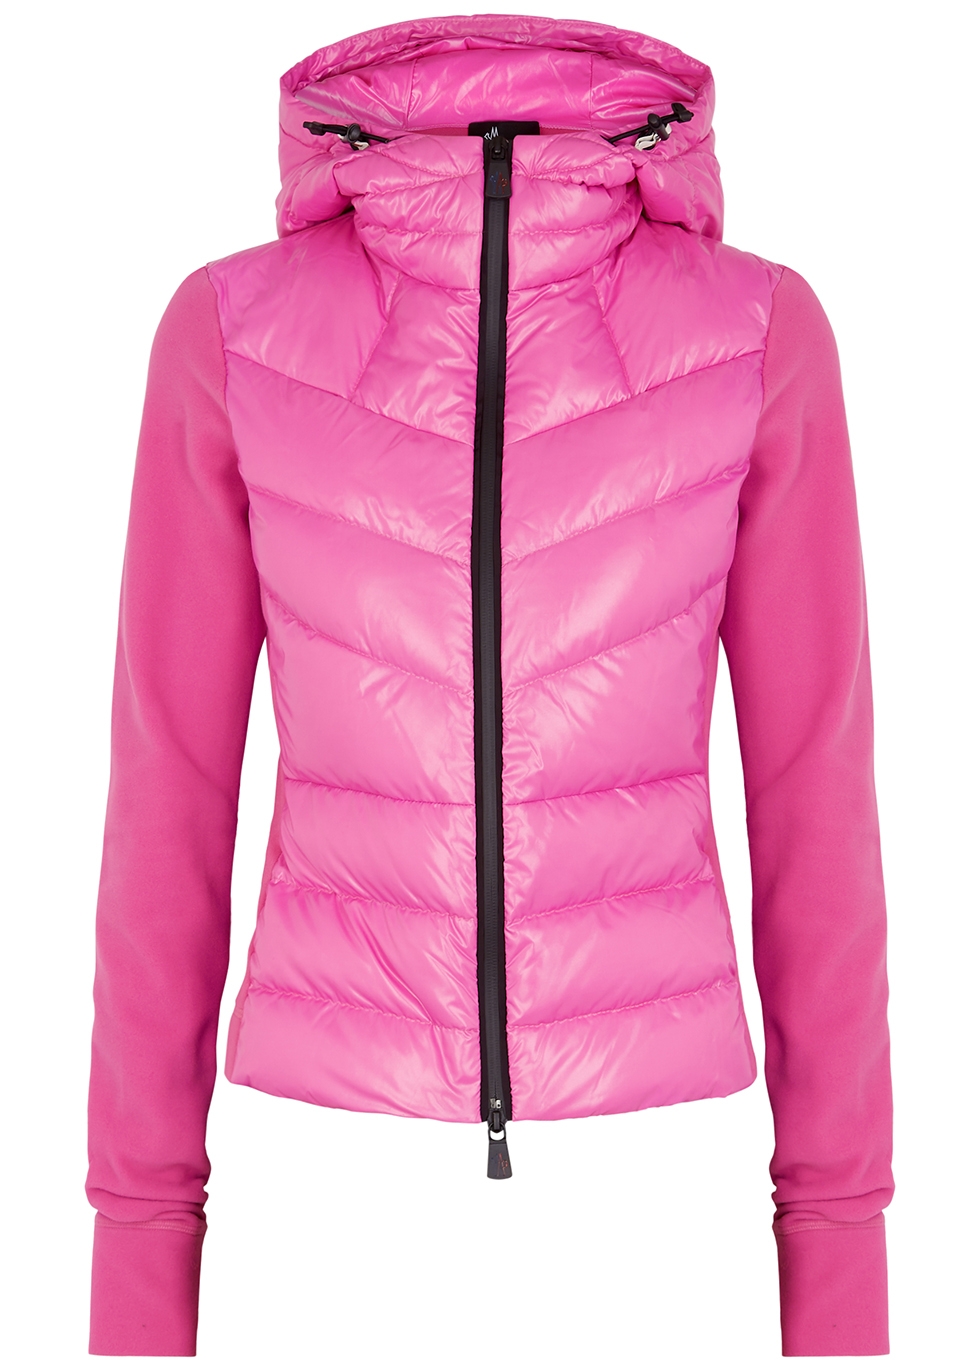 Moncler Grenoble pink shell and fleece jacket - Harvey Nichols